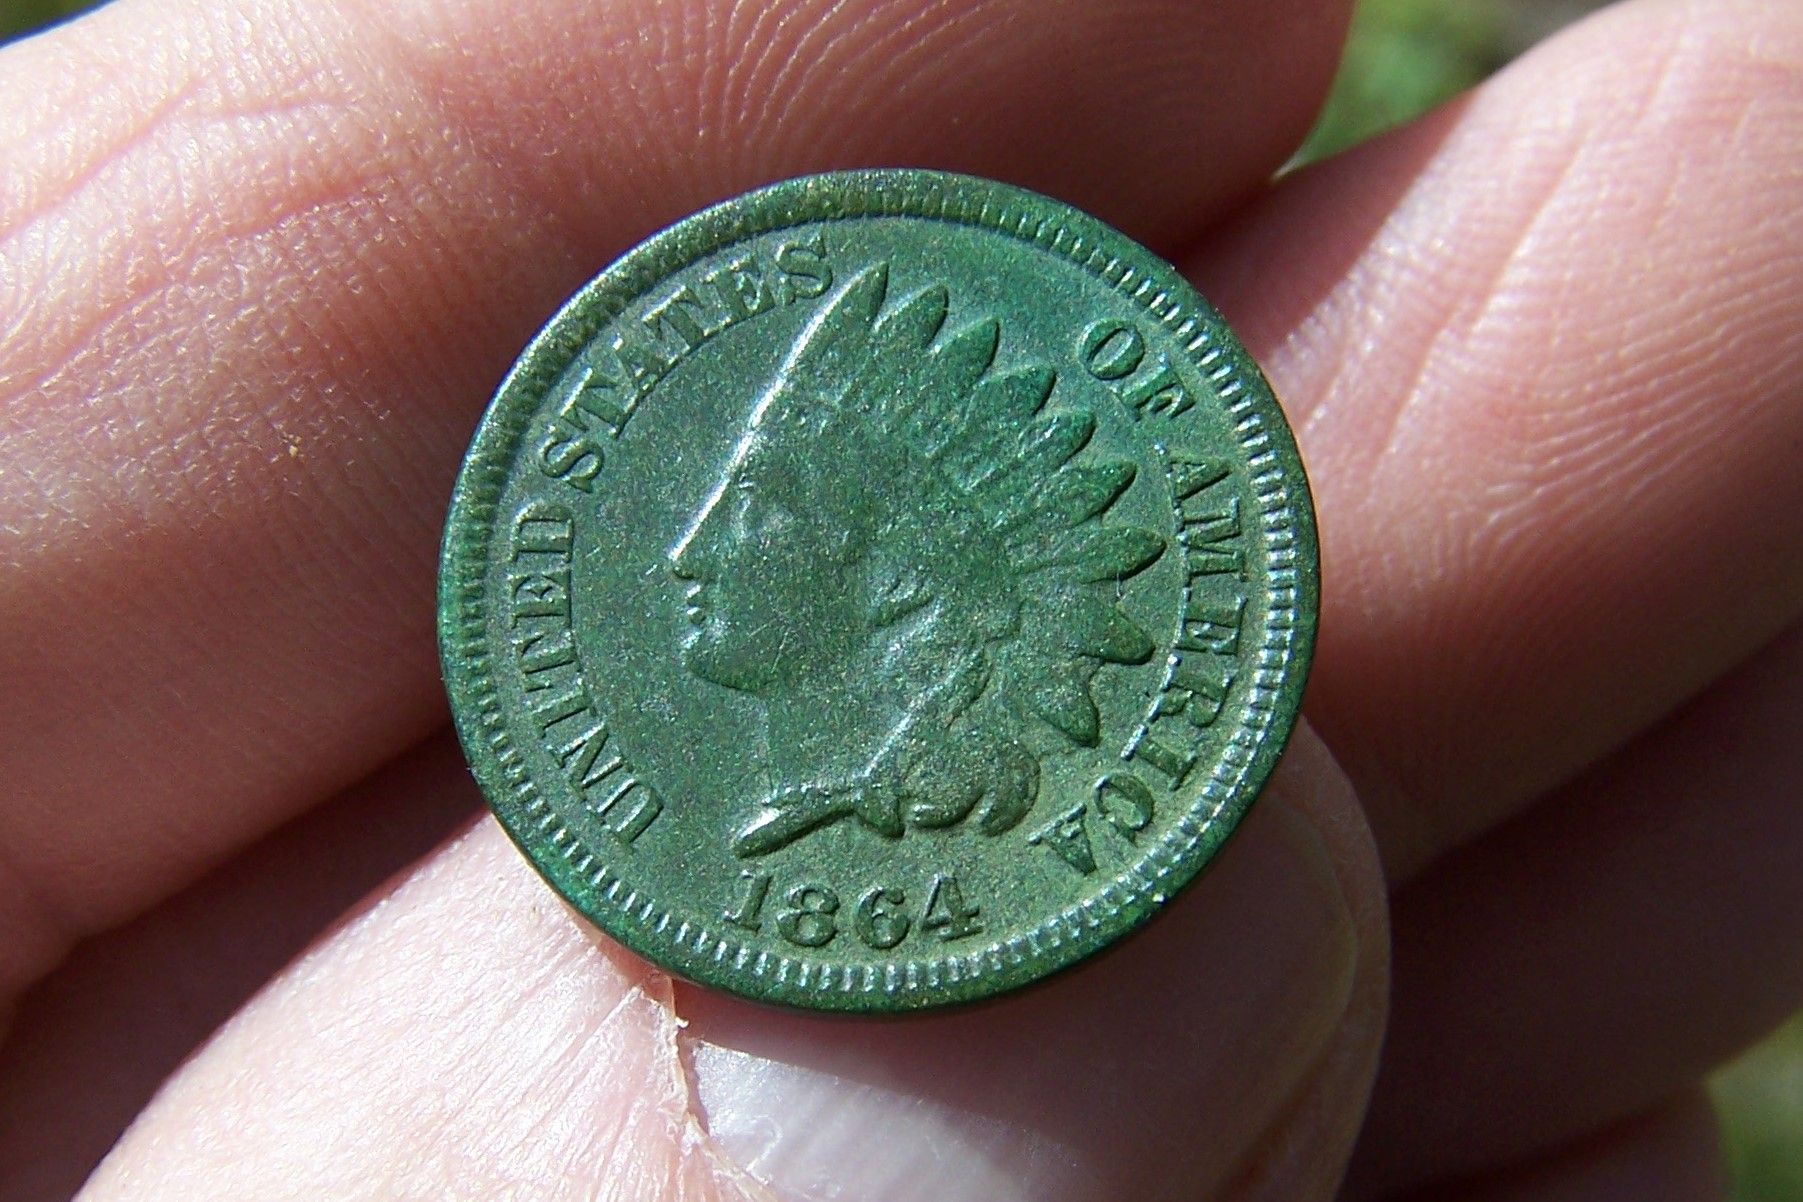 1864 IH Cent